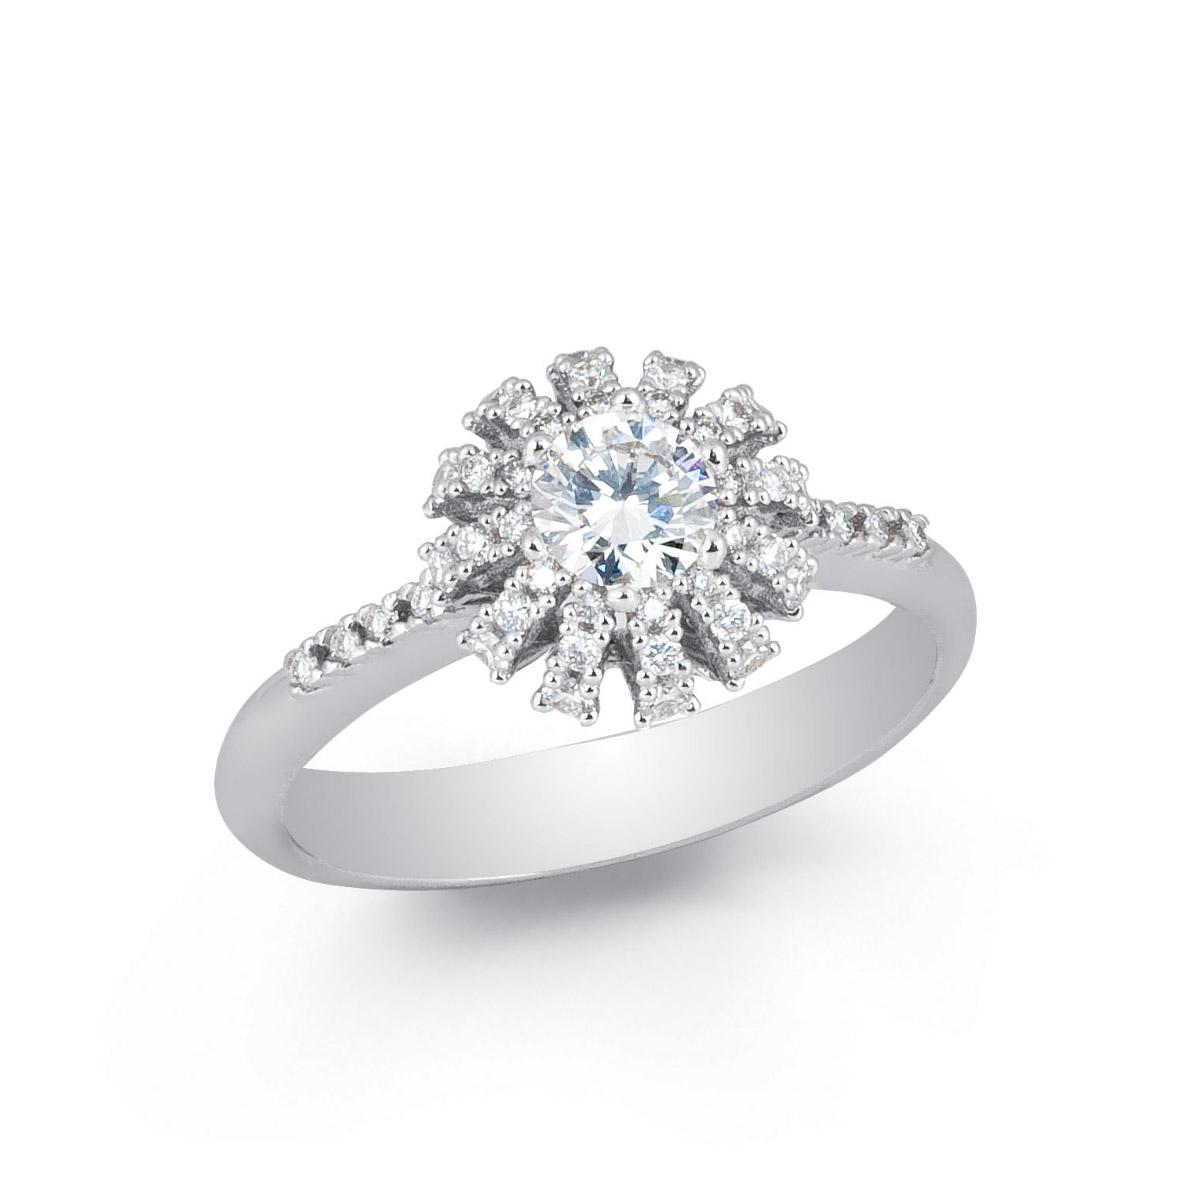 Multi-stone ring with diamonds